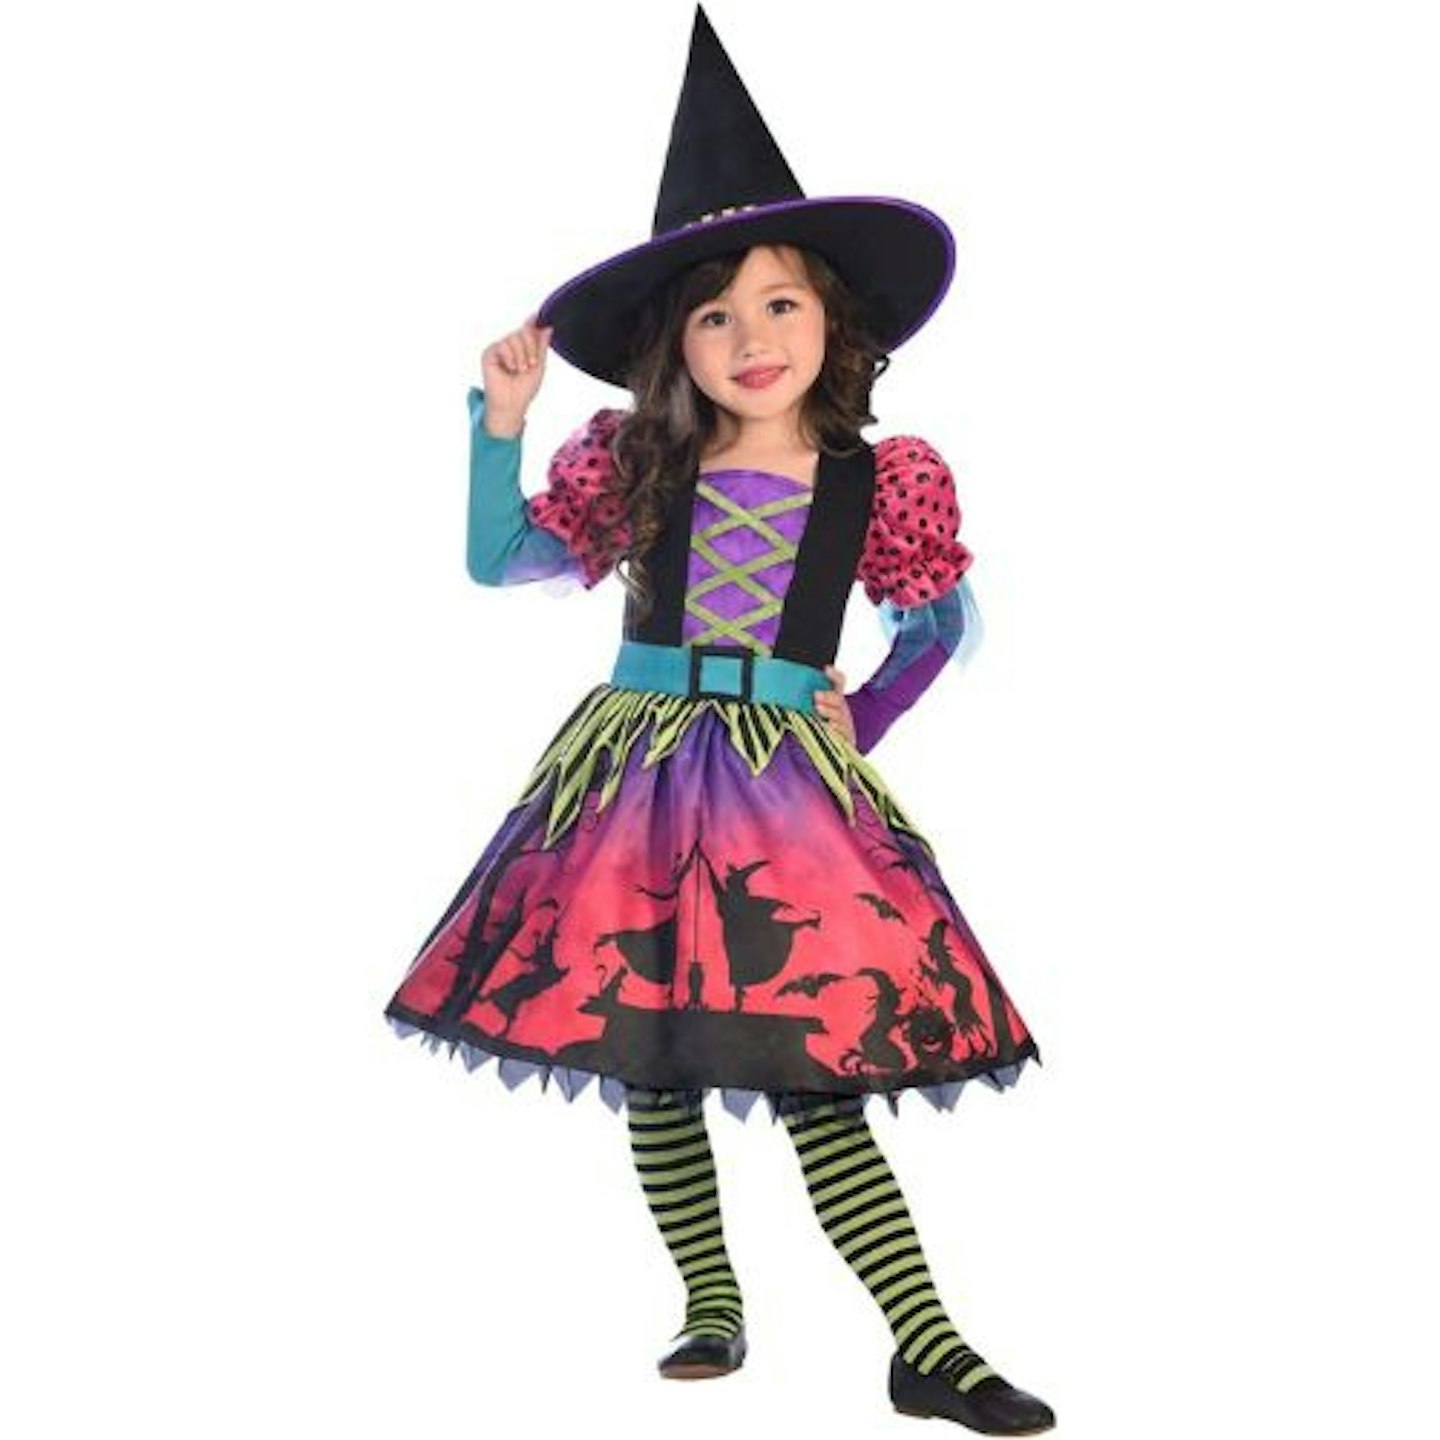 Kids Halloween Costumes: amscan Child Girls Spellbook sweetie Hocus pocus Witch costume